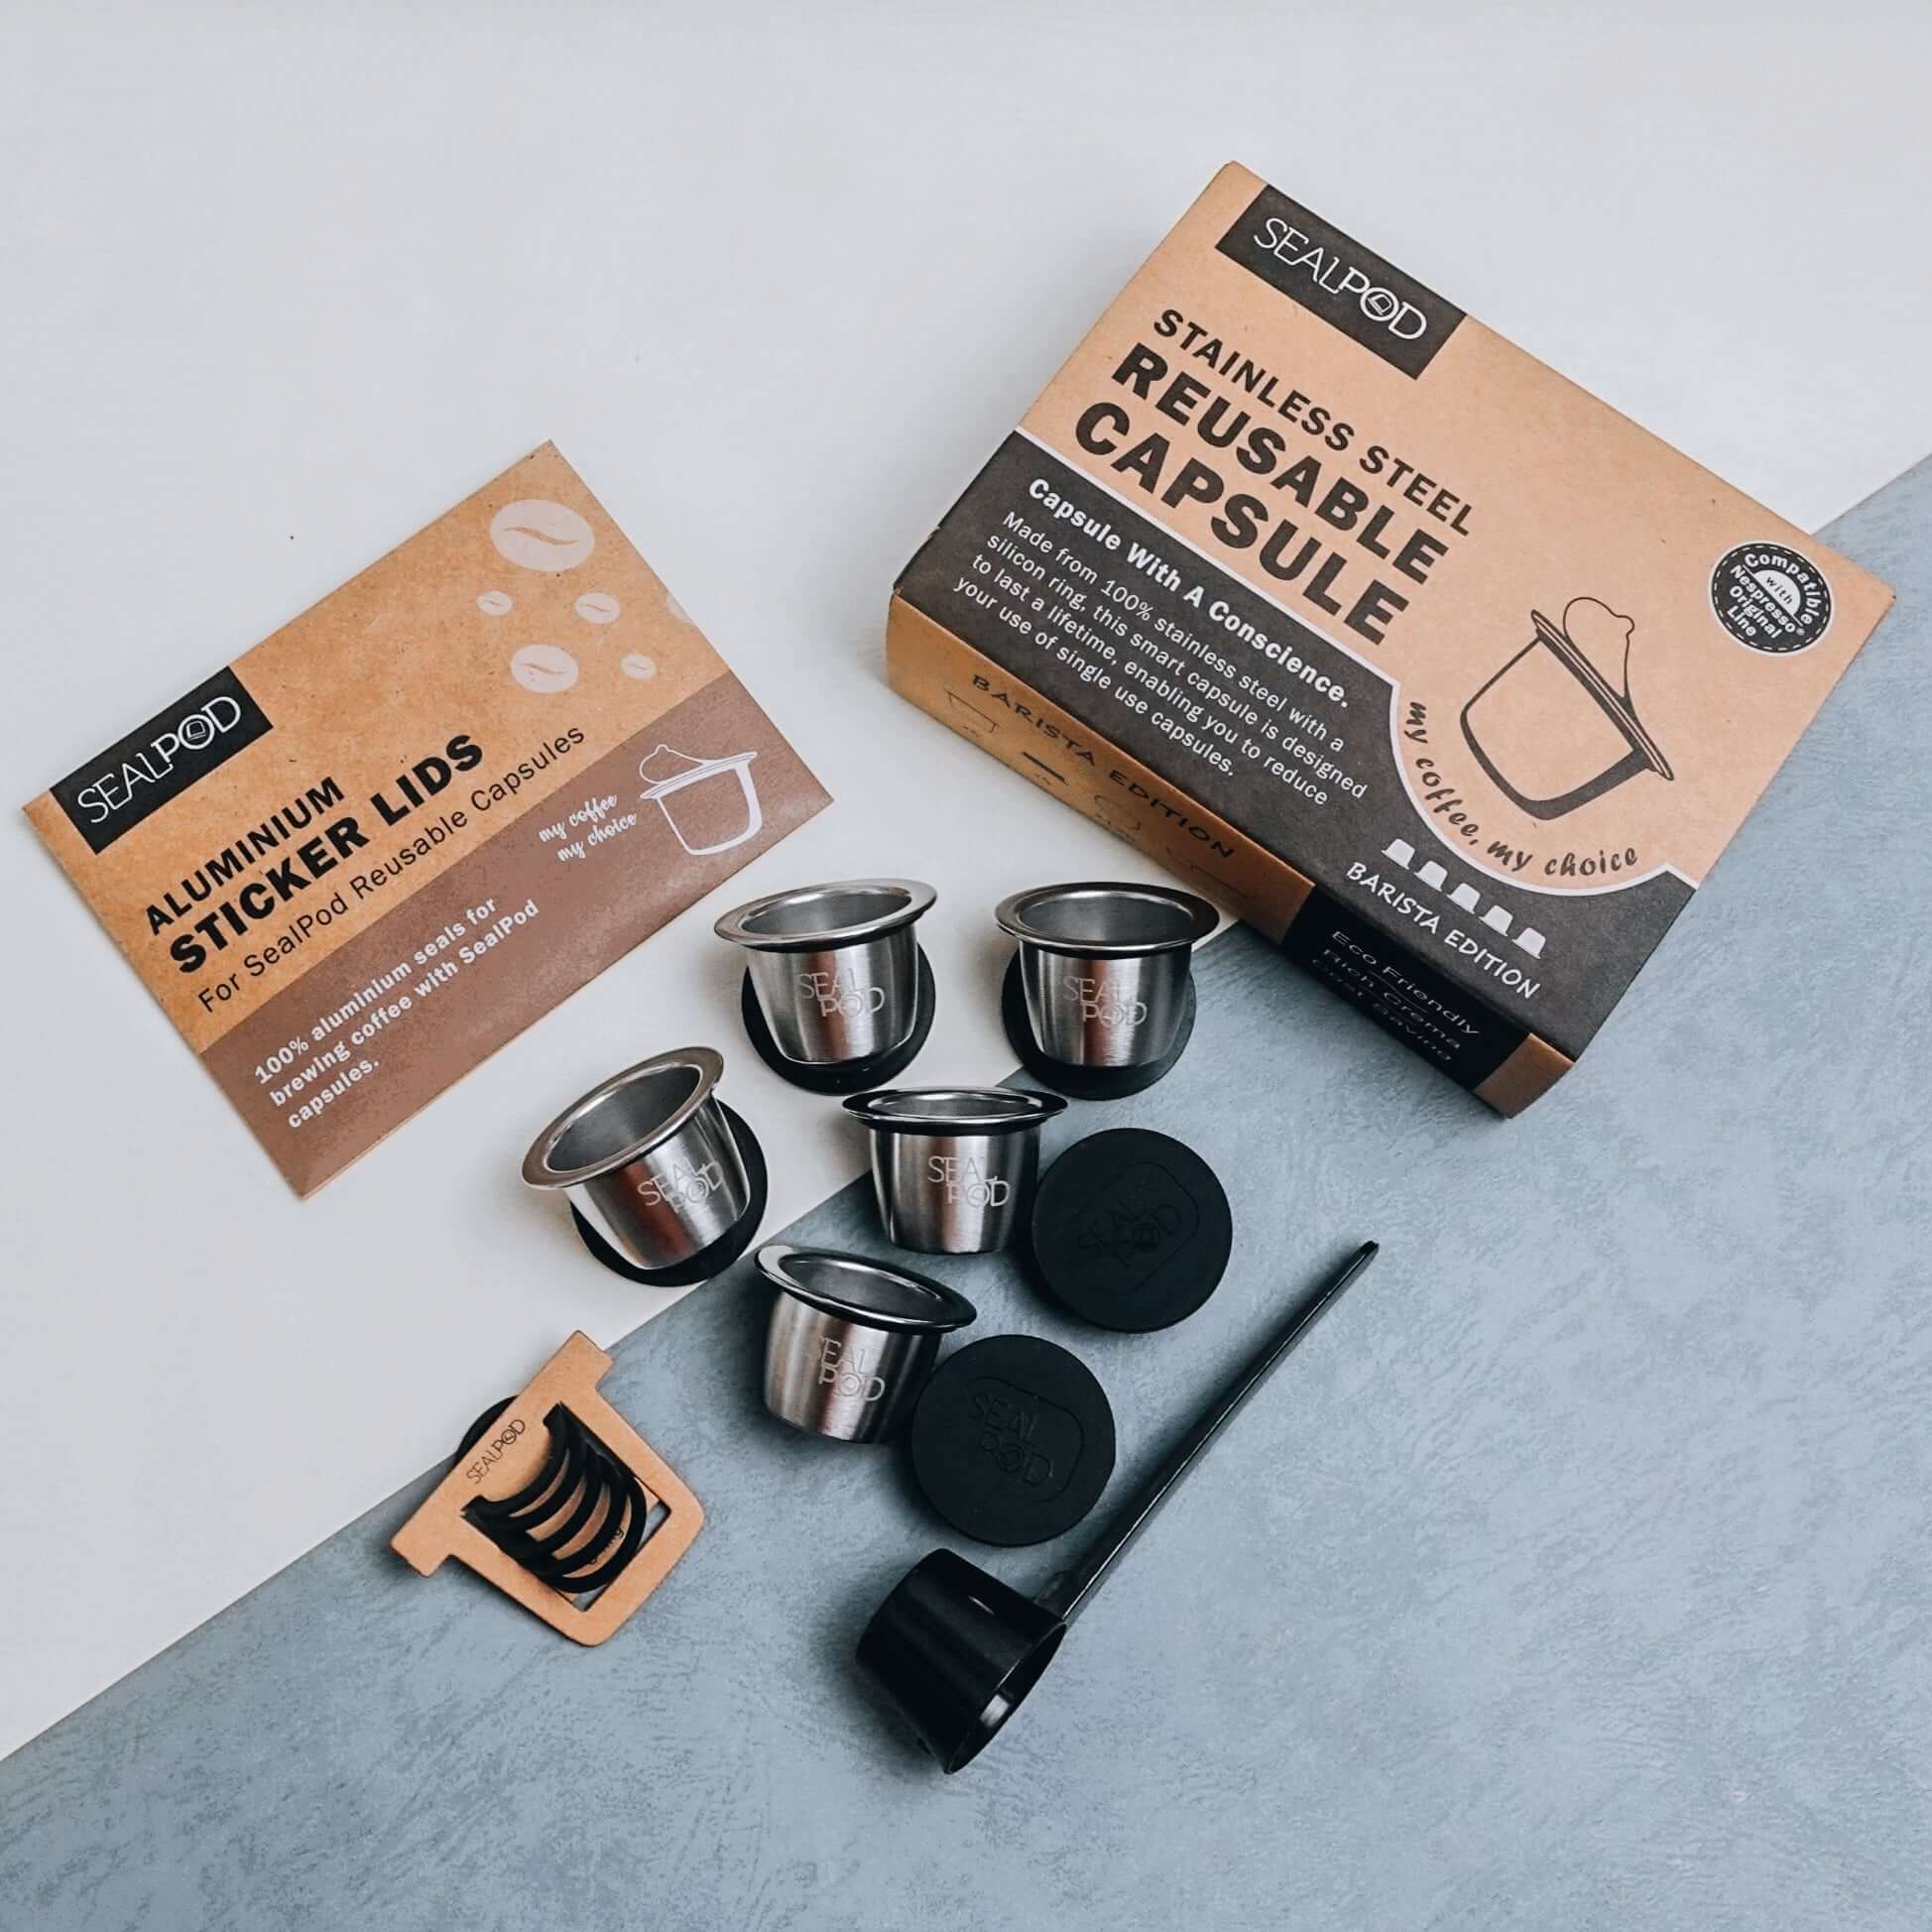 Sealpod Nespresso Refillable pods 5 pods pack